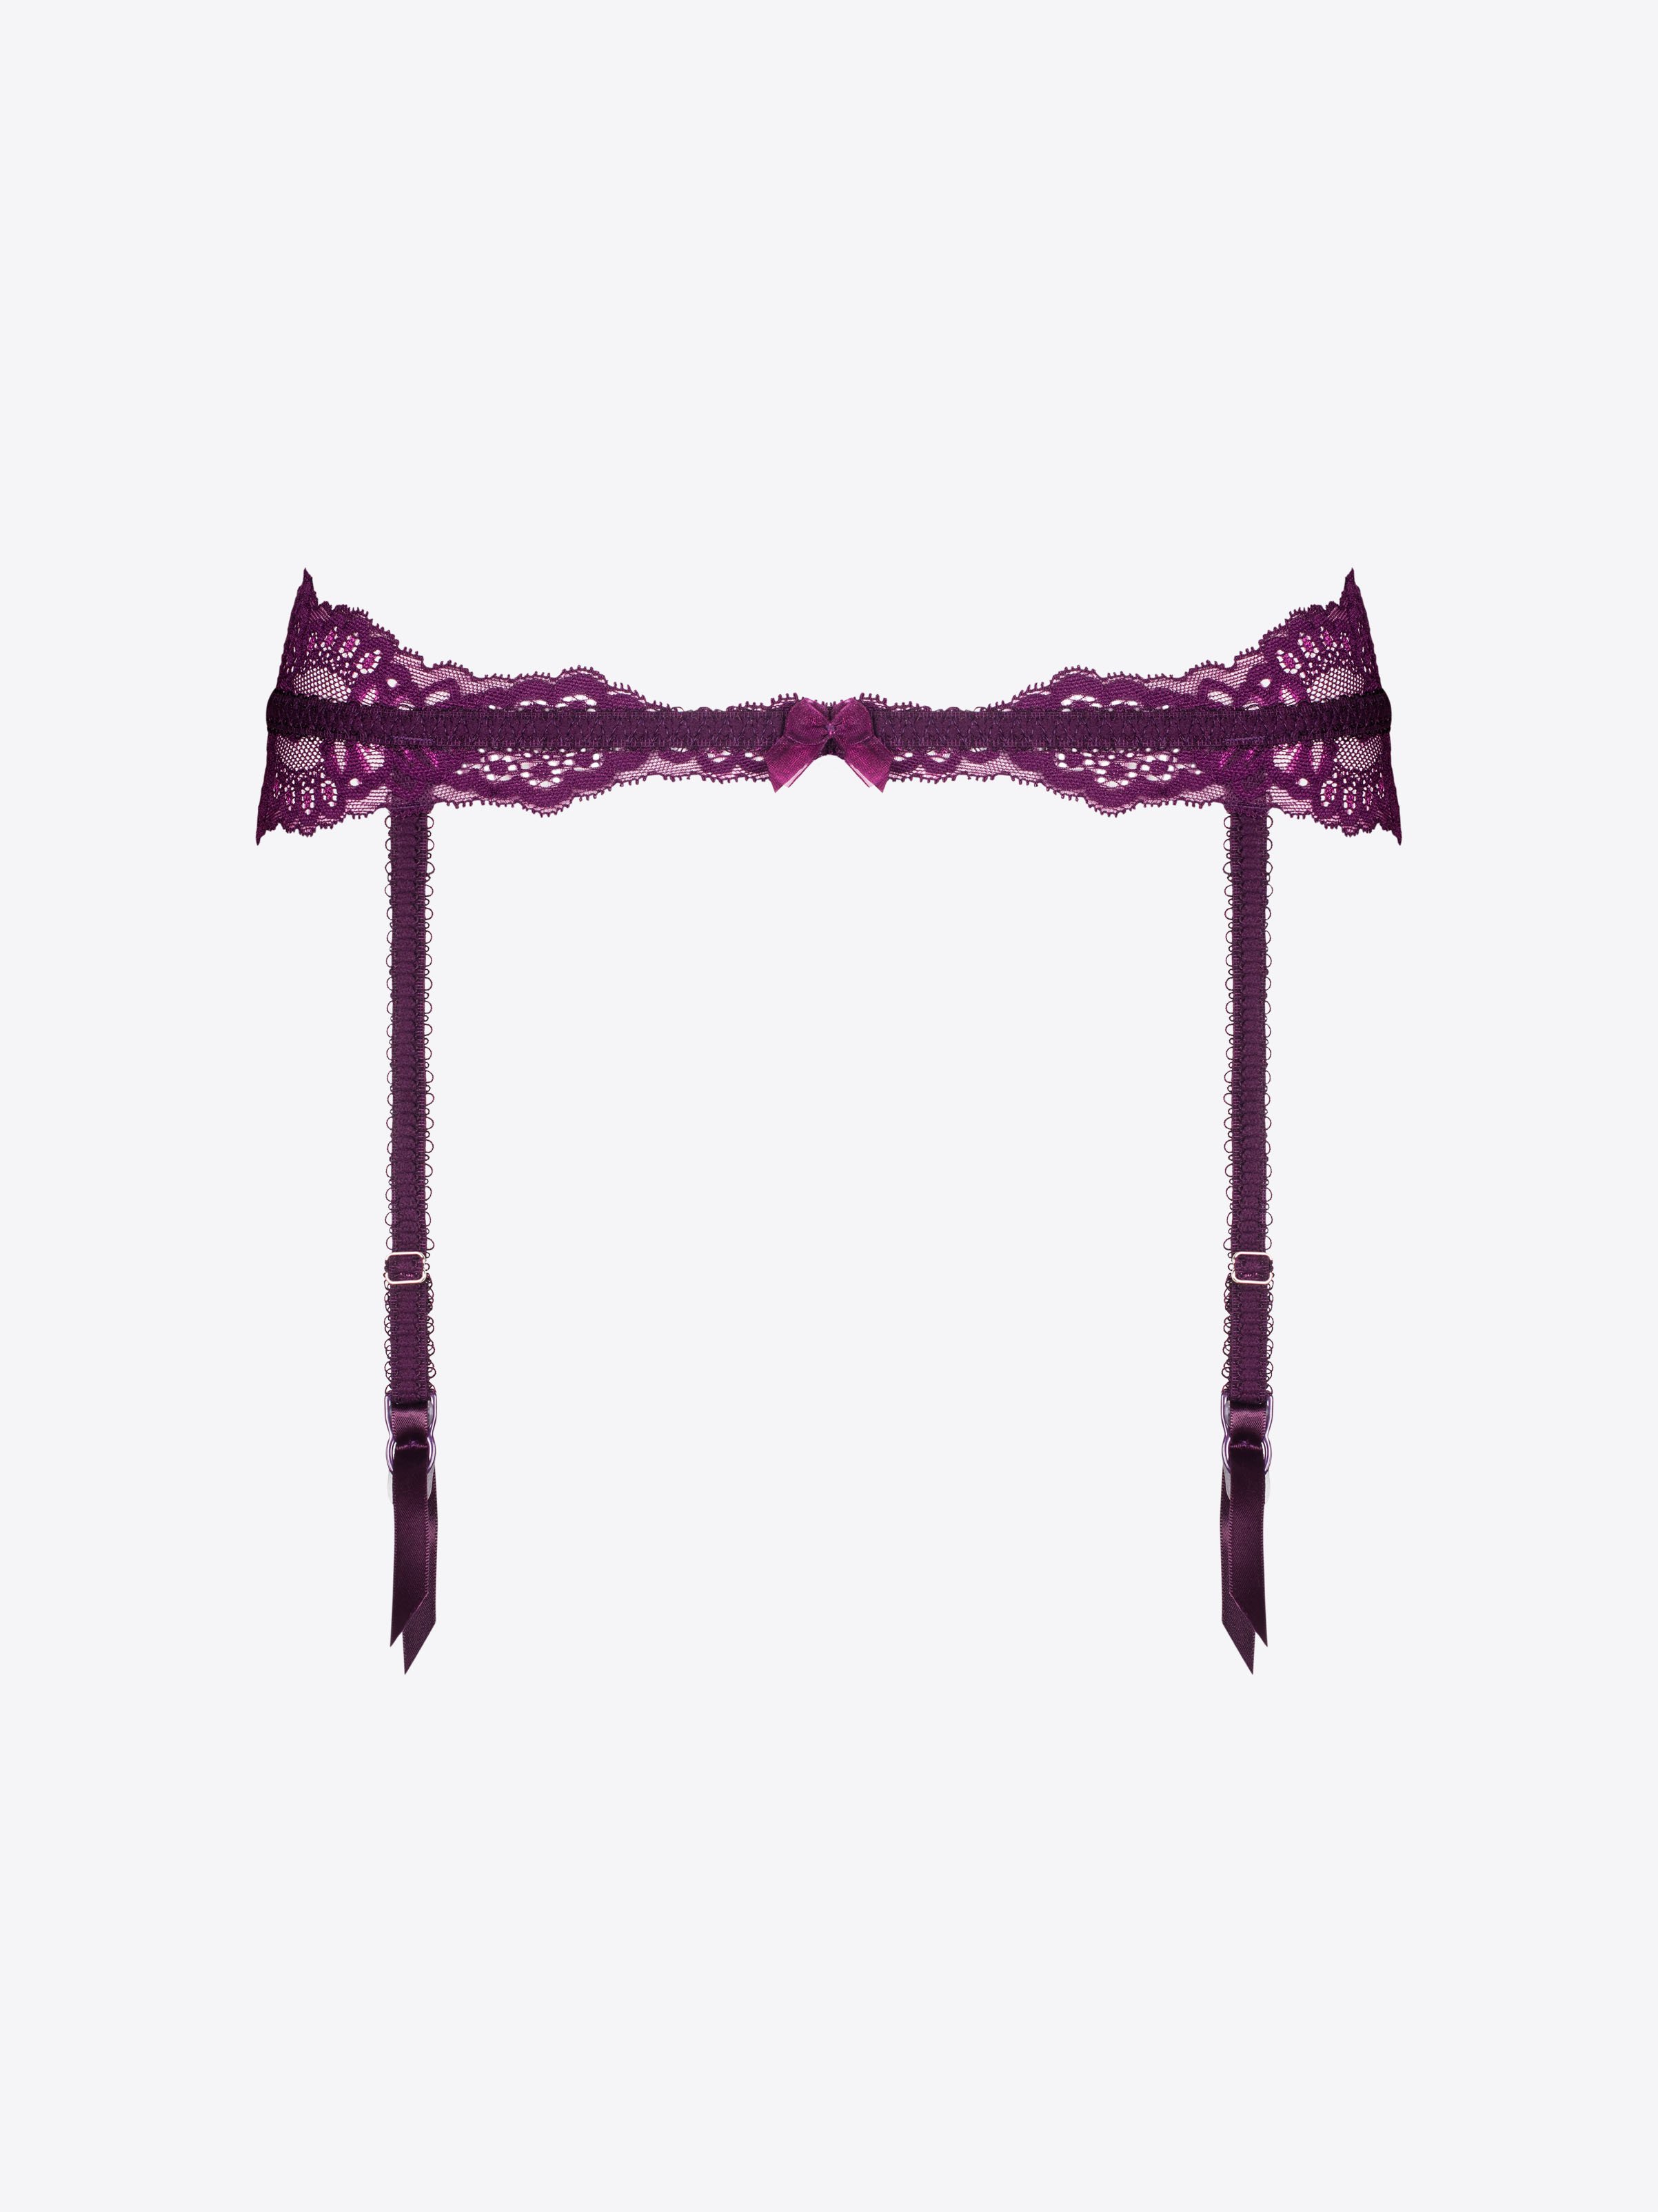 Eleanor Suspender - Purple Jade - $14.75 - CHANGE Lingerie